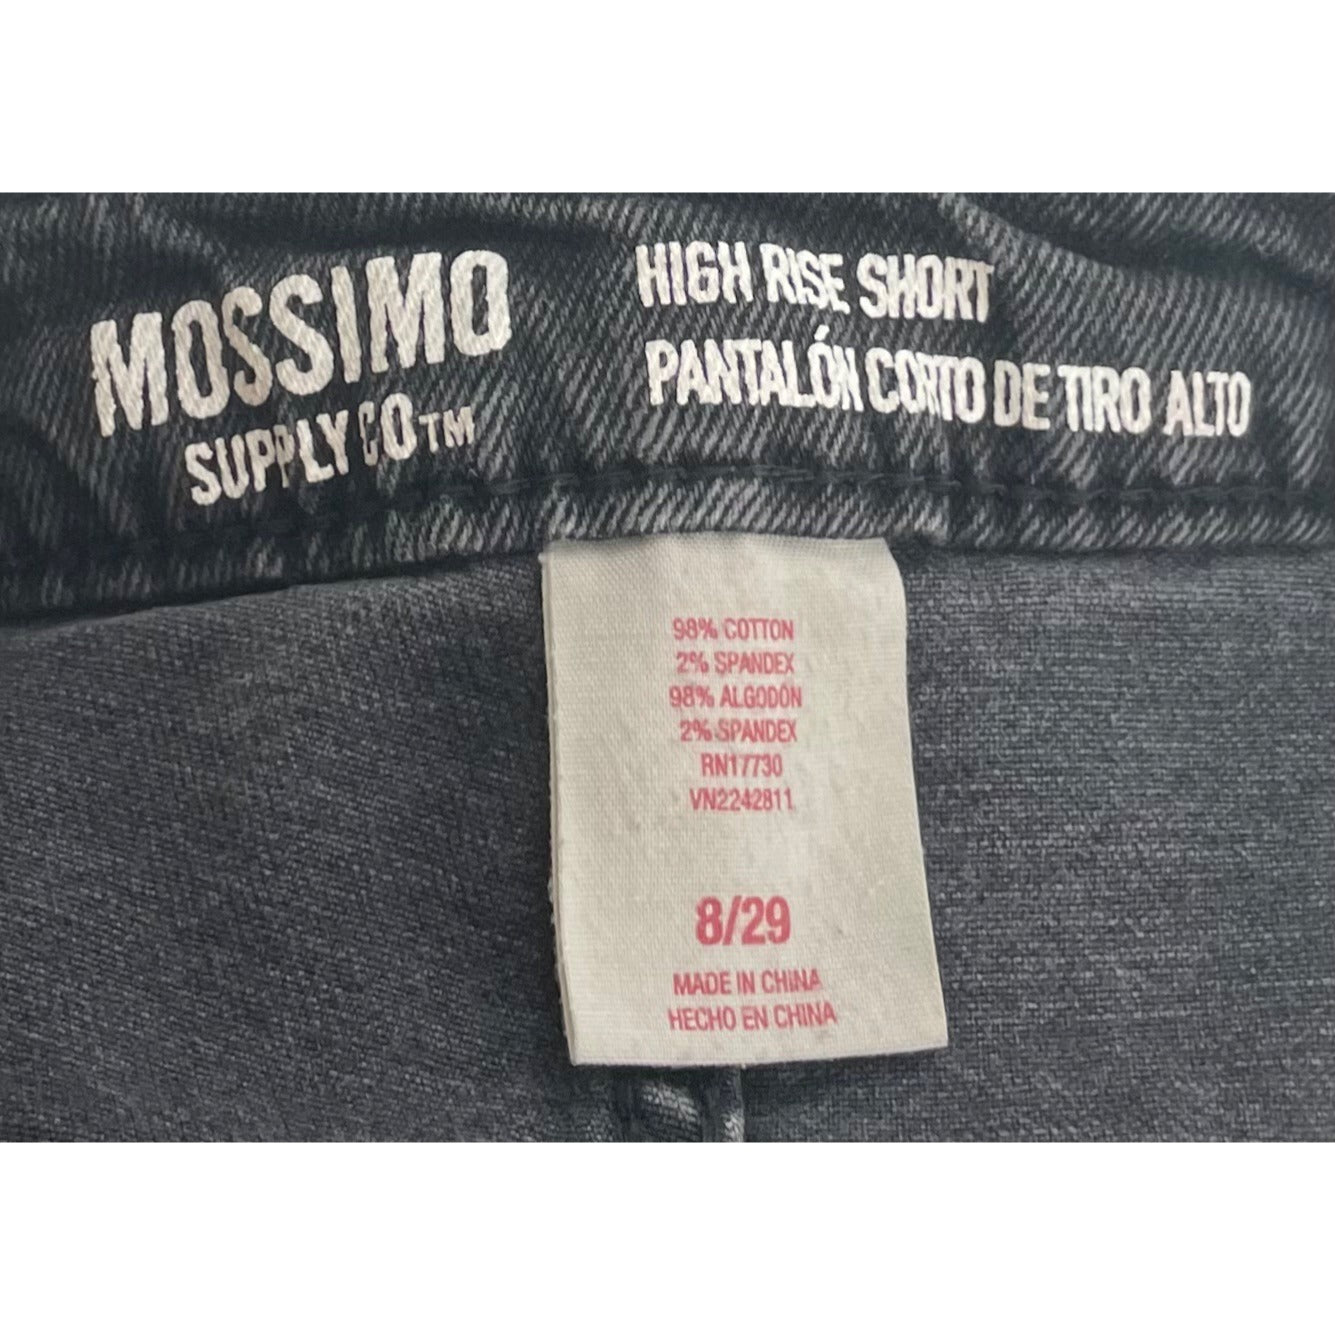 Mossimo Women's Size 8/29 High Rise Black Distressed Fringe Hem Denim Shorts